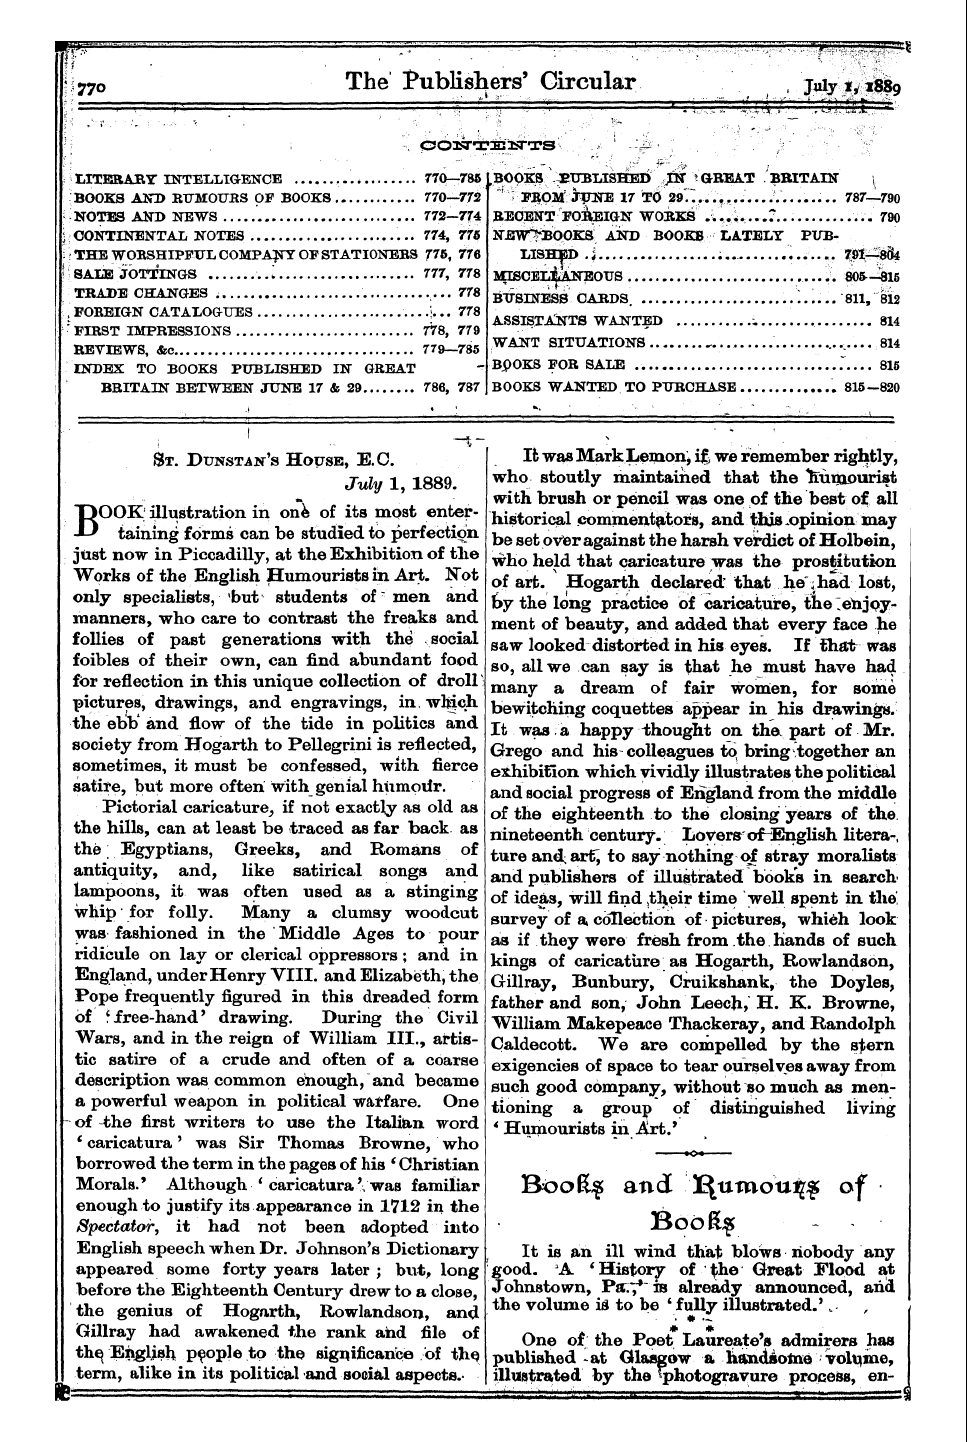 Publishers’ Circular (1880-1890): jS F Y, 1st edition - The Rubkshcircular '